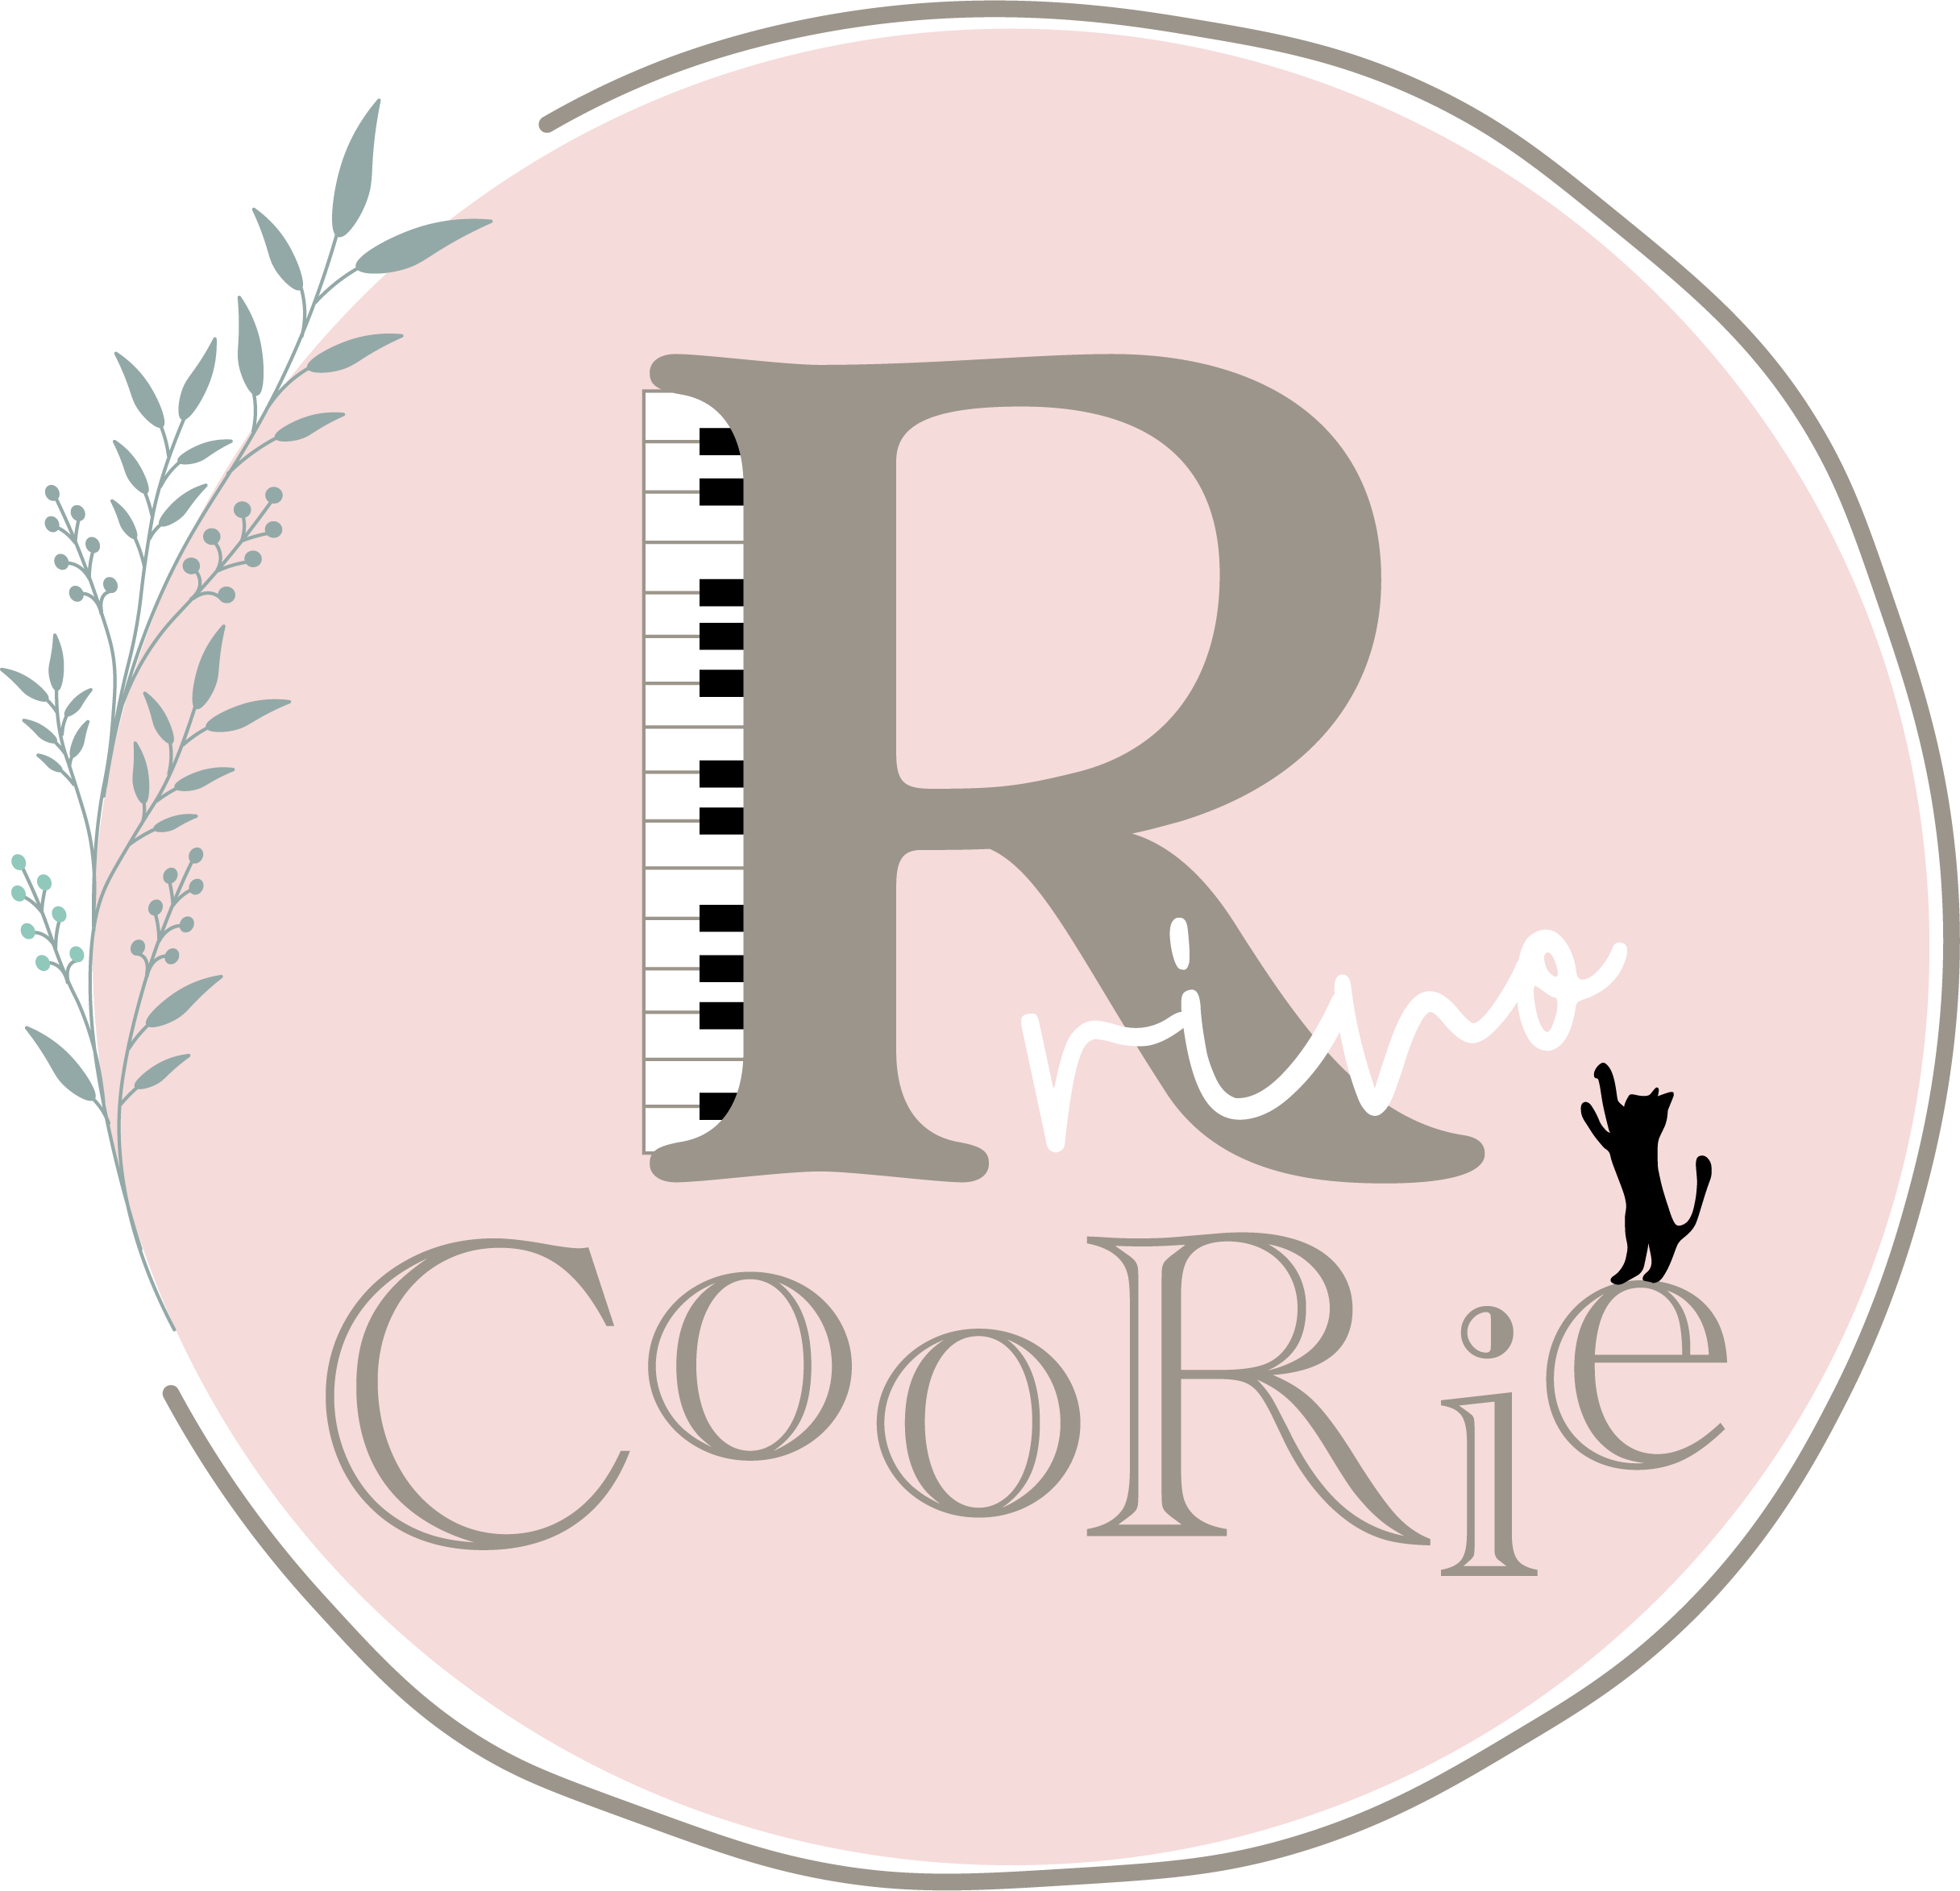 CooRie Official Web Site